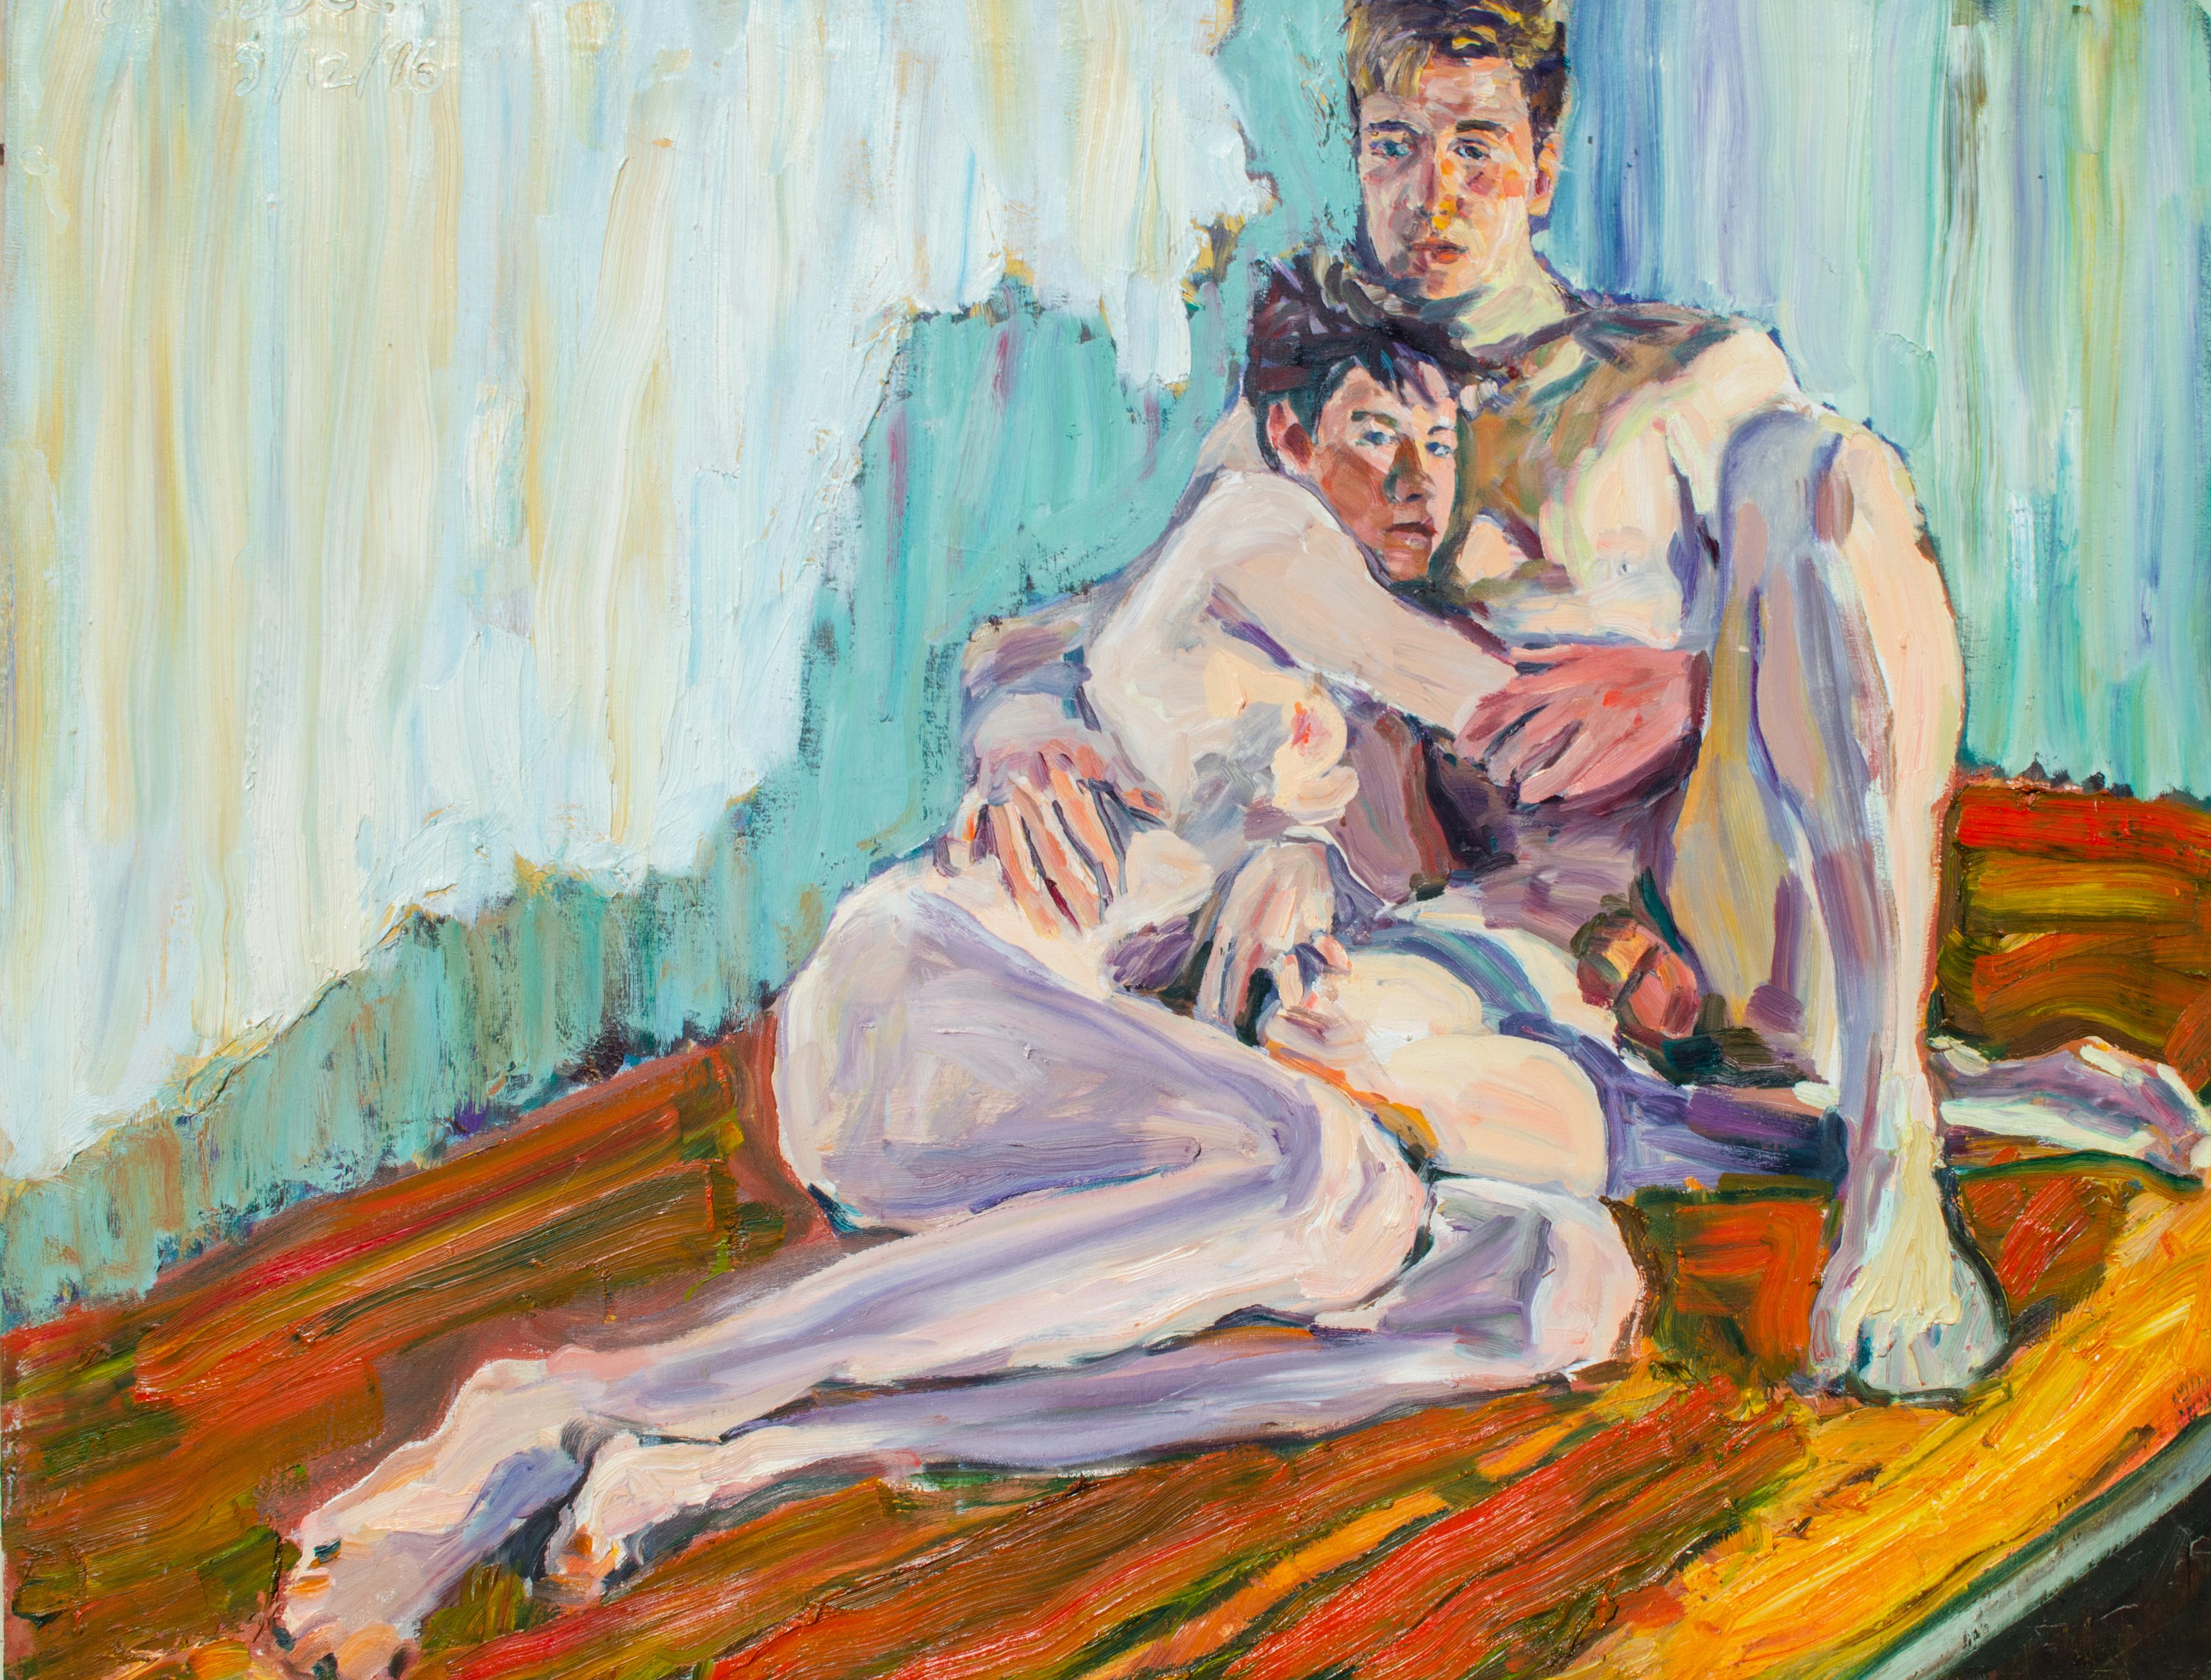 Unknown Portrait Painting – 1986 Intimate Couple Portrait des Mystery Artist